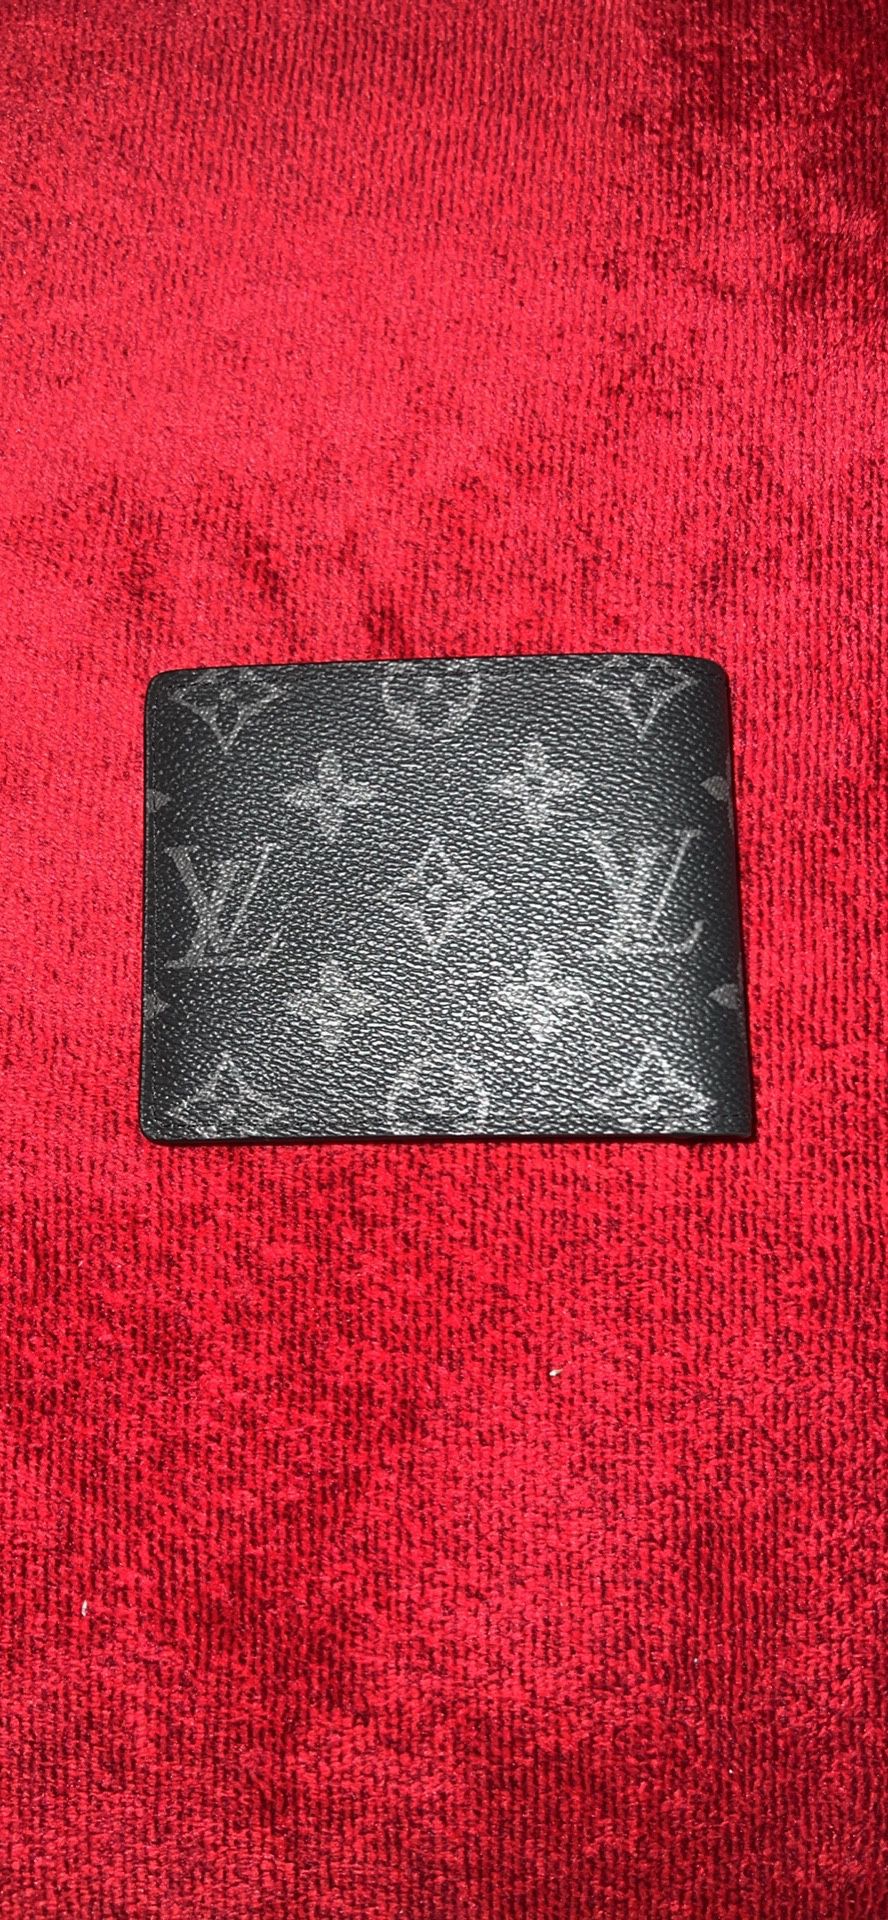 LV wallet